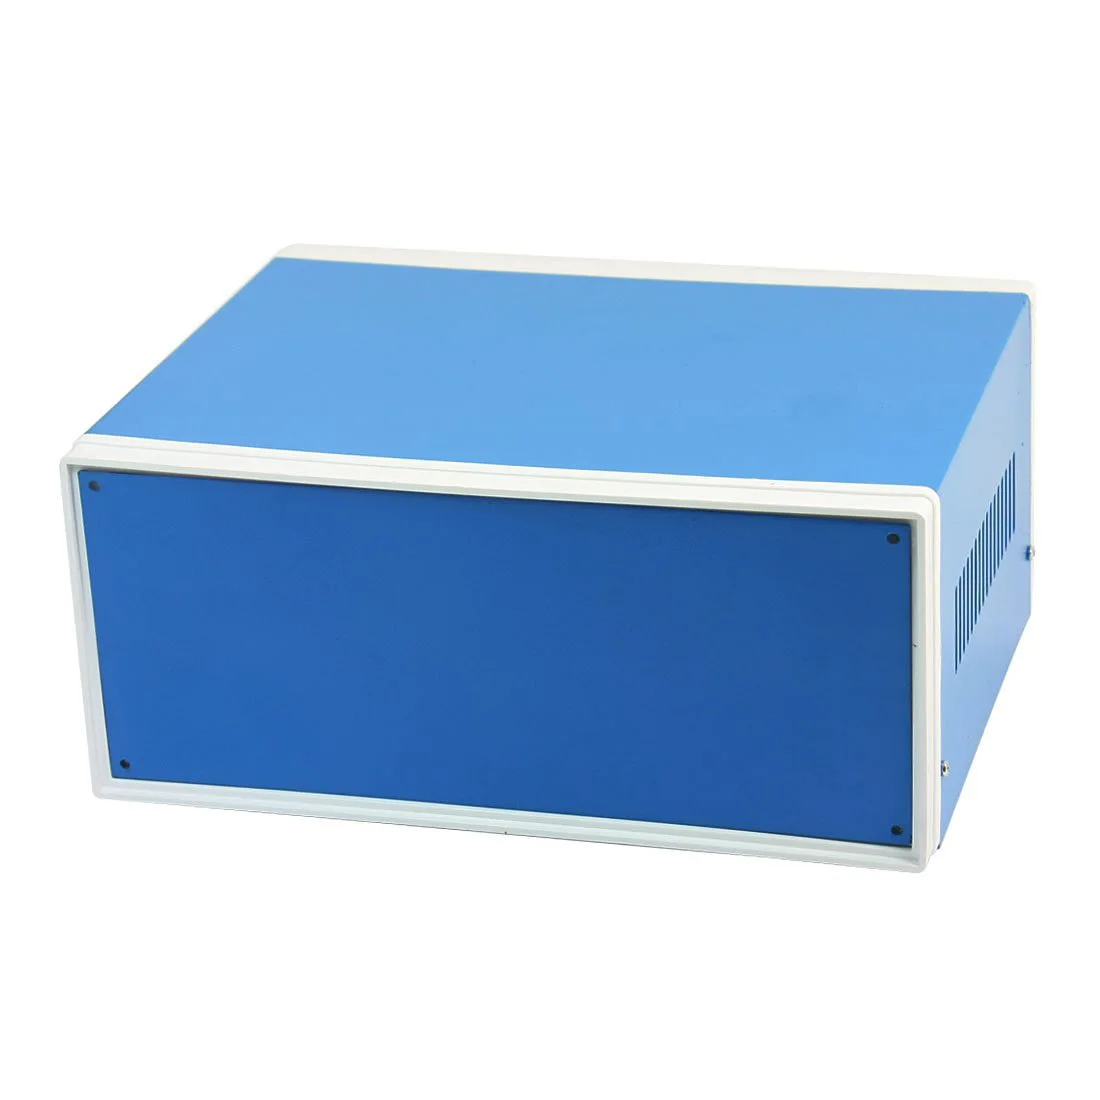 

Brand New 9.8" x 7.5" x 4.3" Blue Metal Enclosure Project Case DIY Junction Box